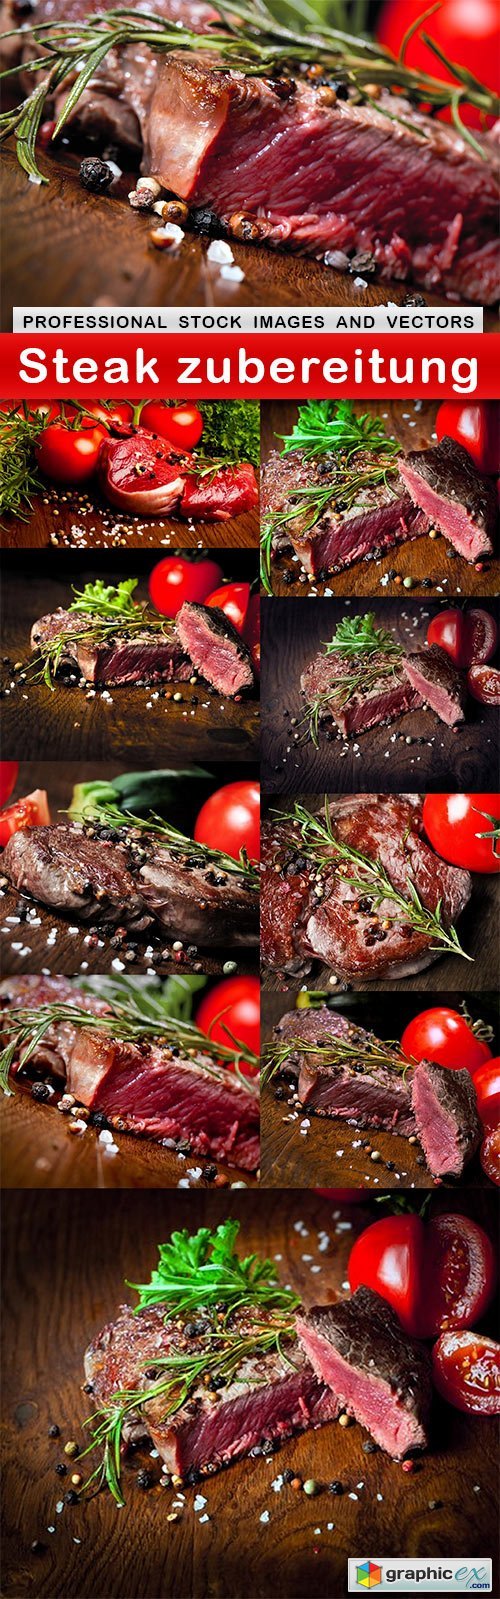 Steak zubereitung - 10 UHQ JPEG